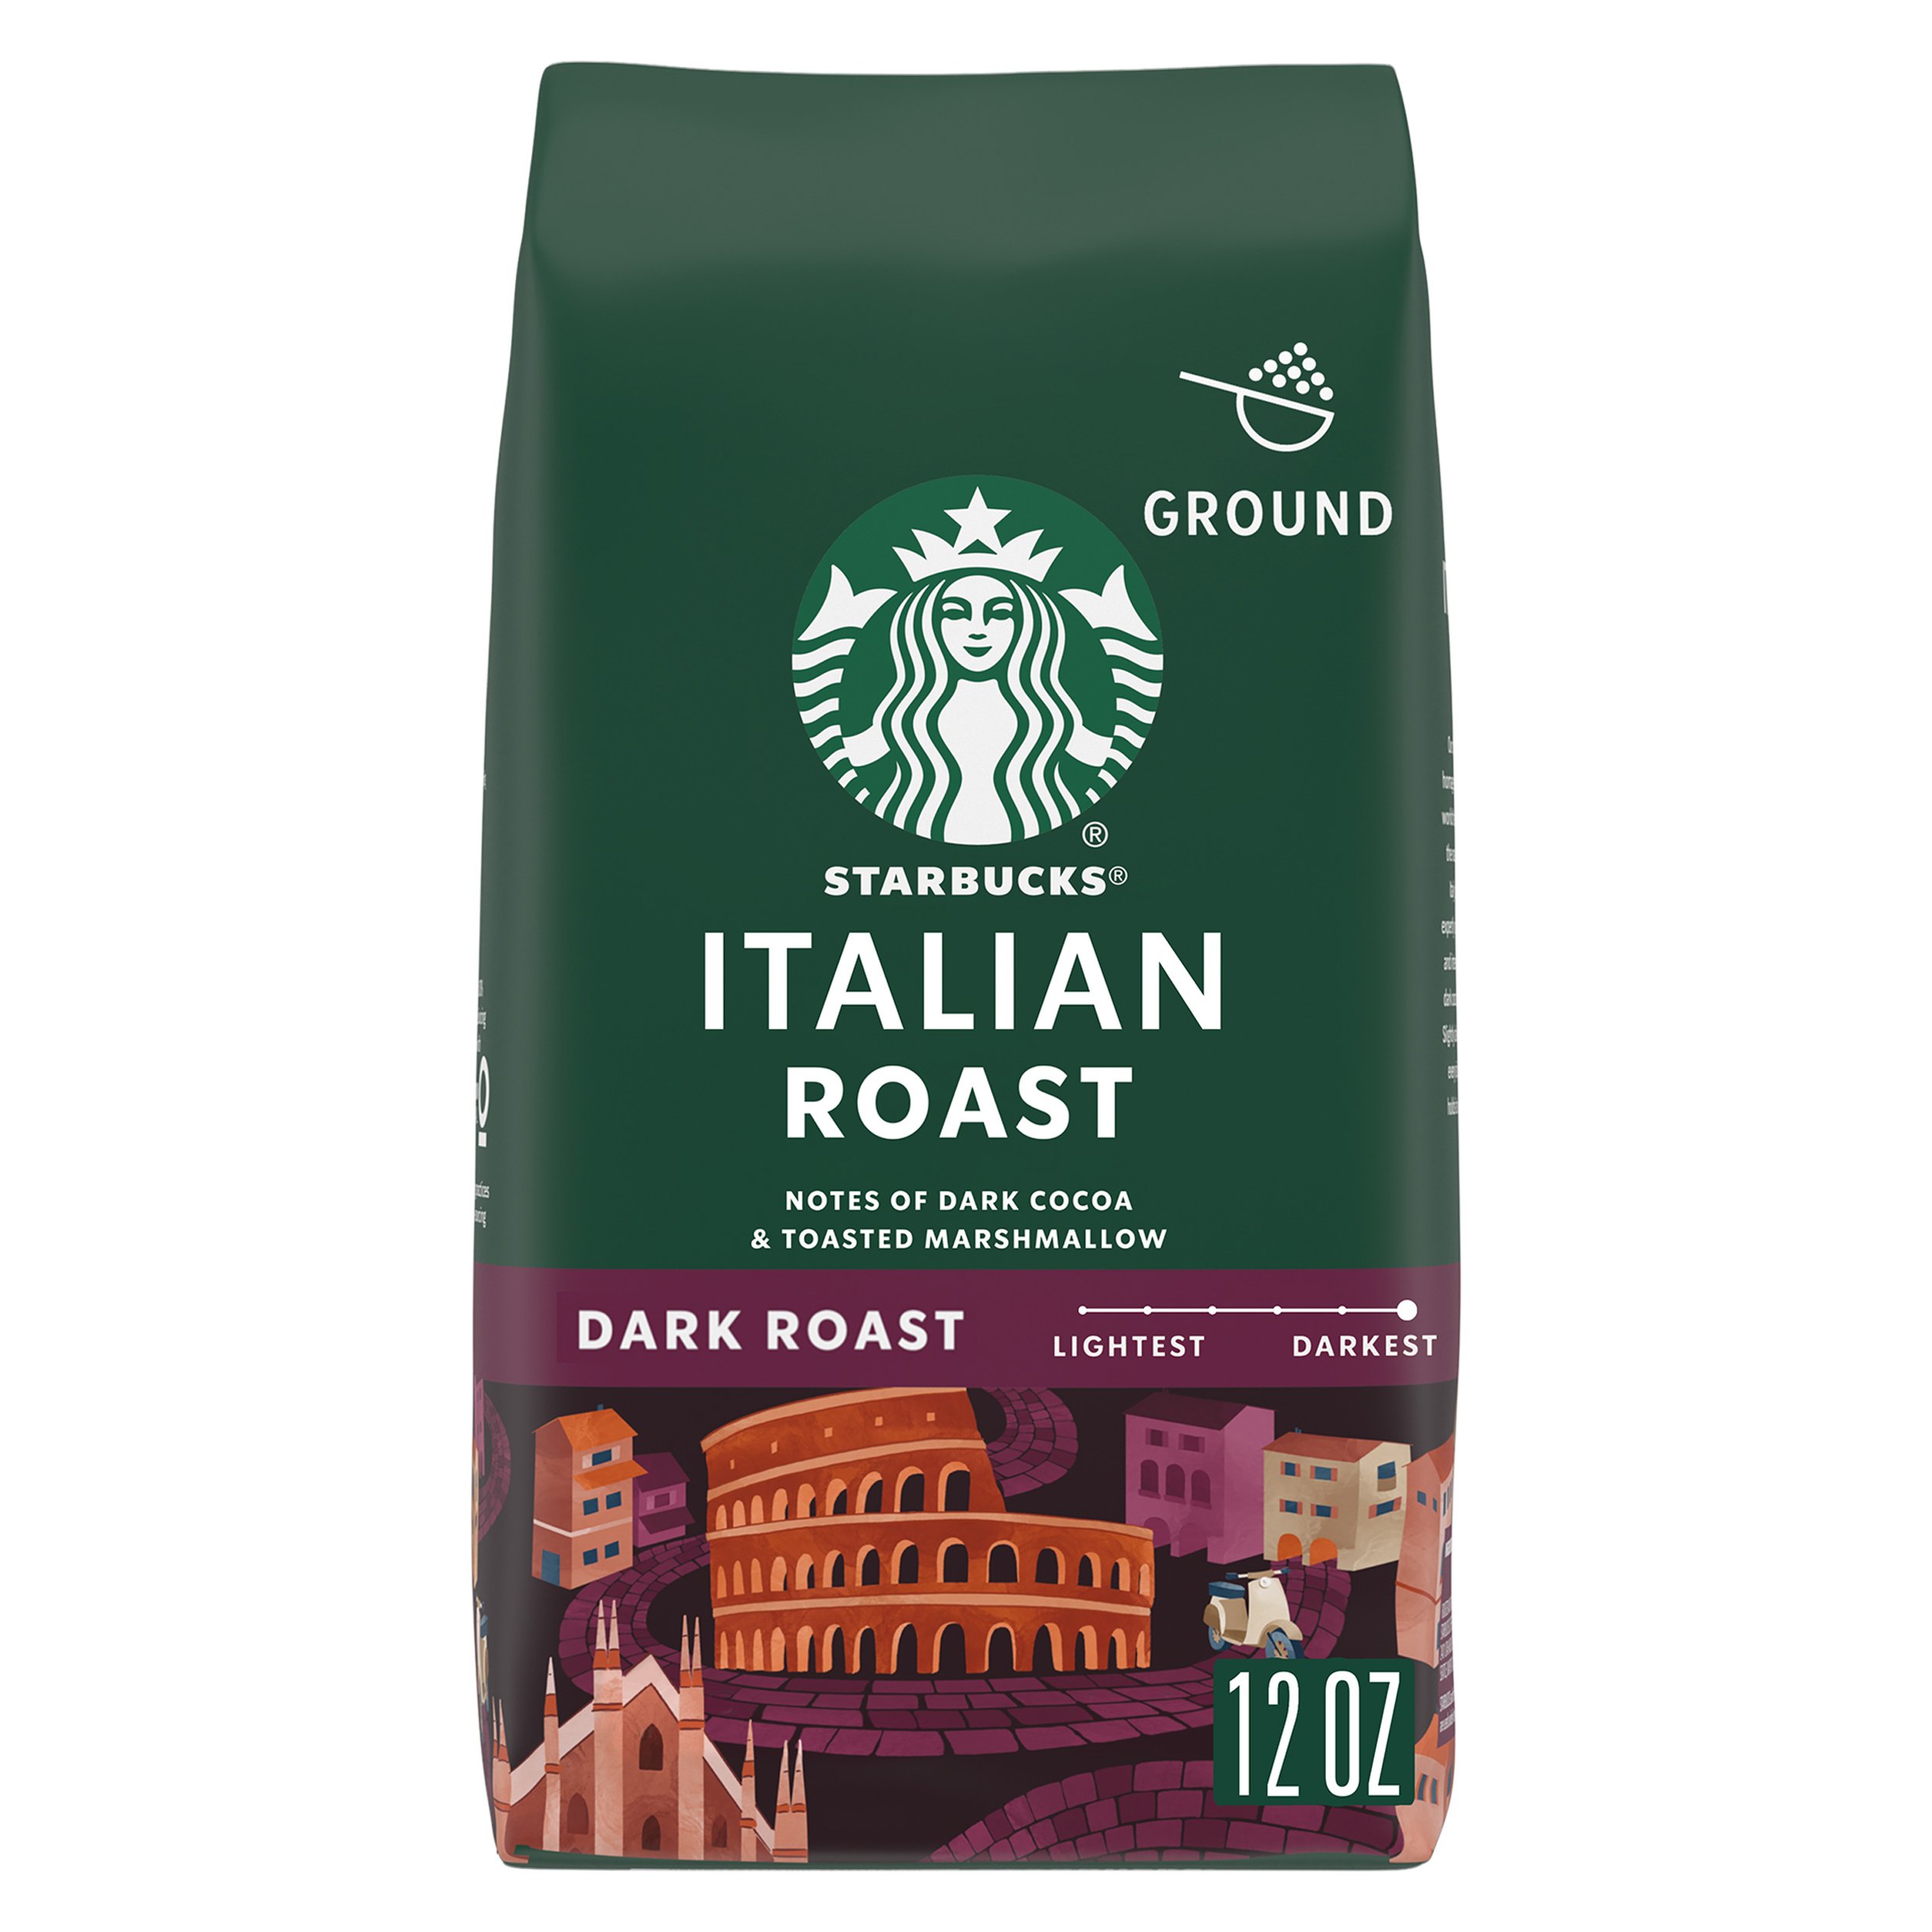 Starbucks Italian Roast Dark Roast Ground Coffee Shop Coffee At H E B